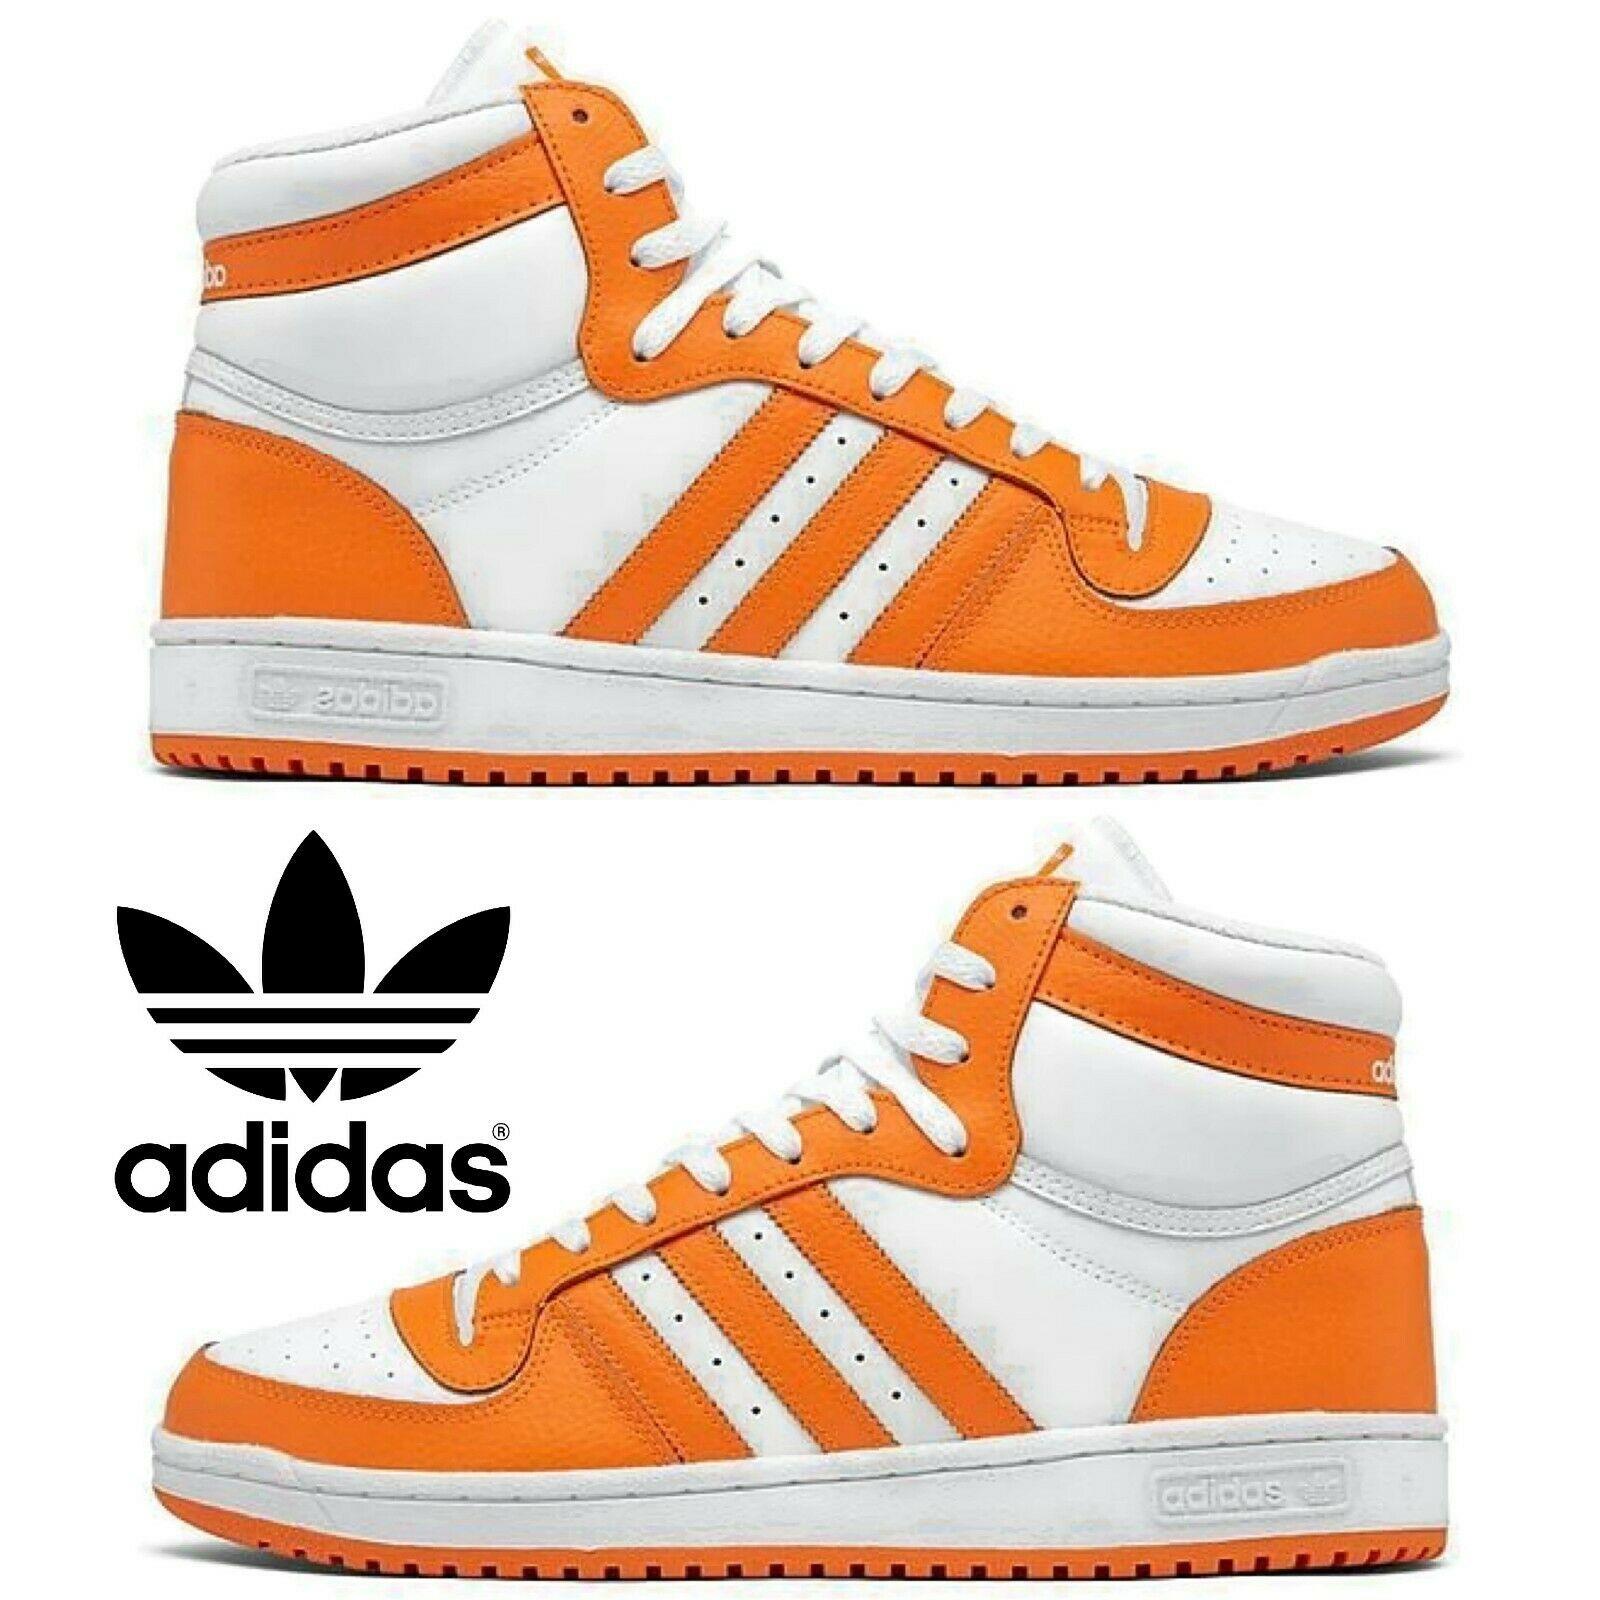 Adidas Originals Top Ten Hi Men`s Sneakers Comfort Casual Shoes White Orange - White , White/Orange Manufacturer